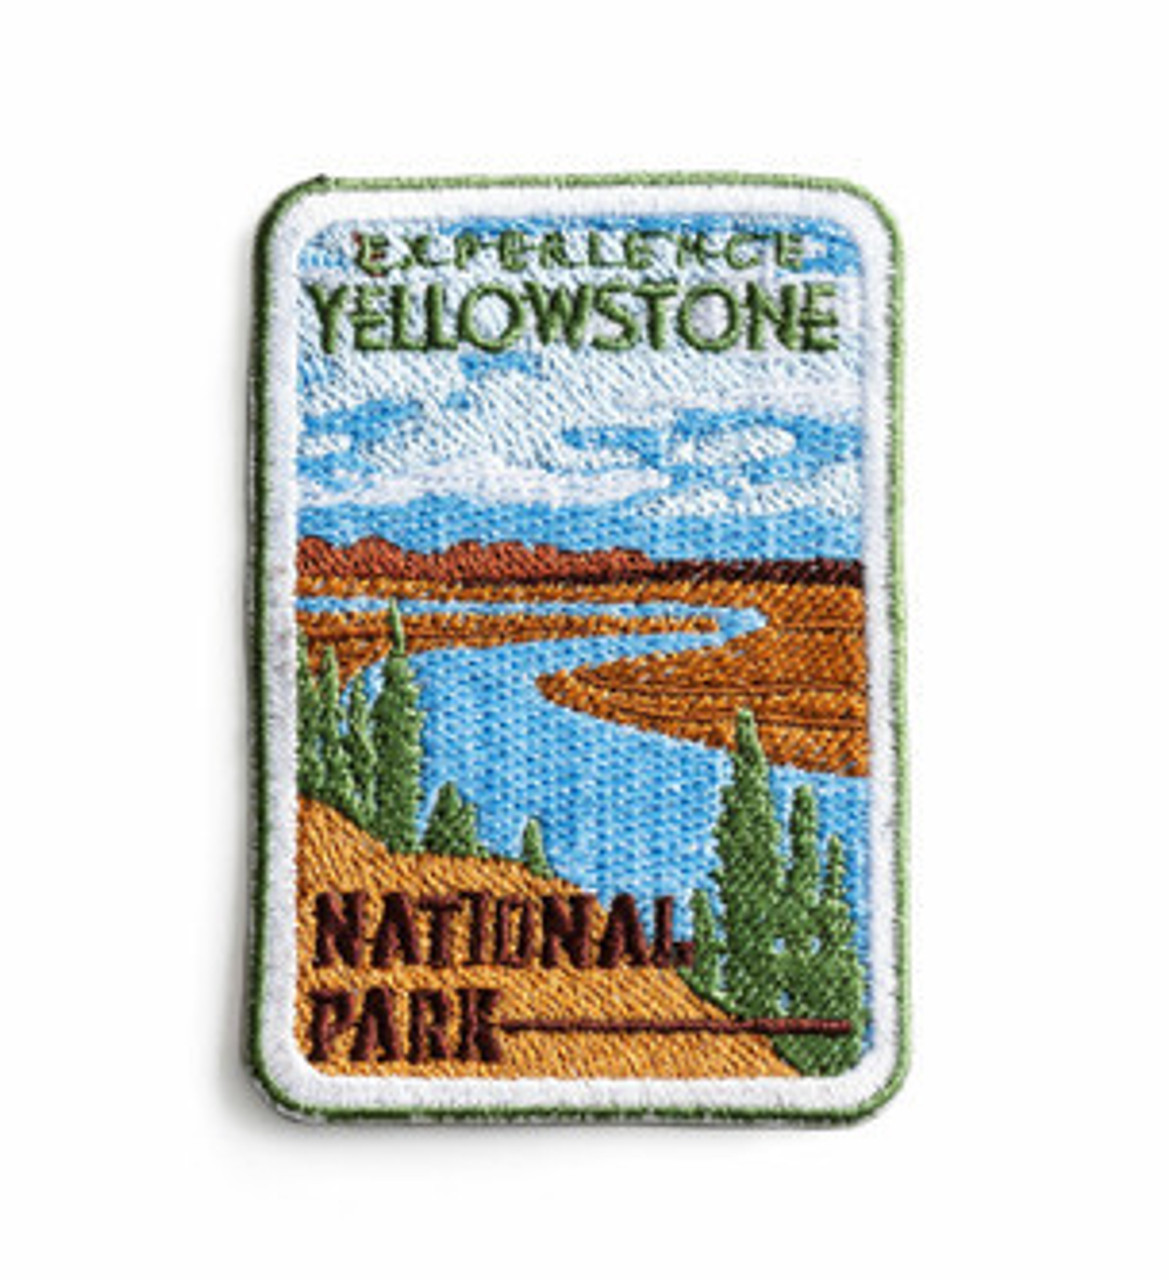 Yosemite National Park Patch